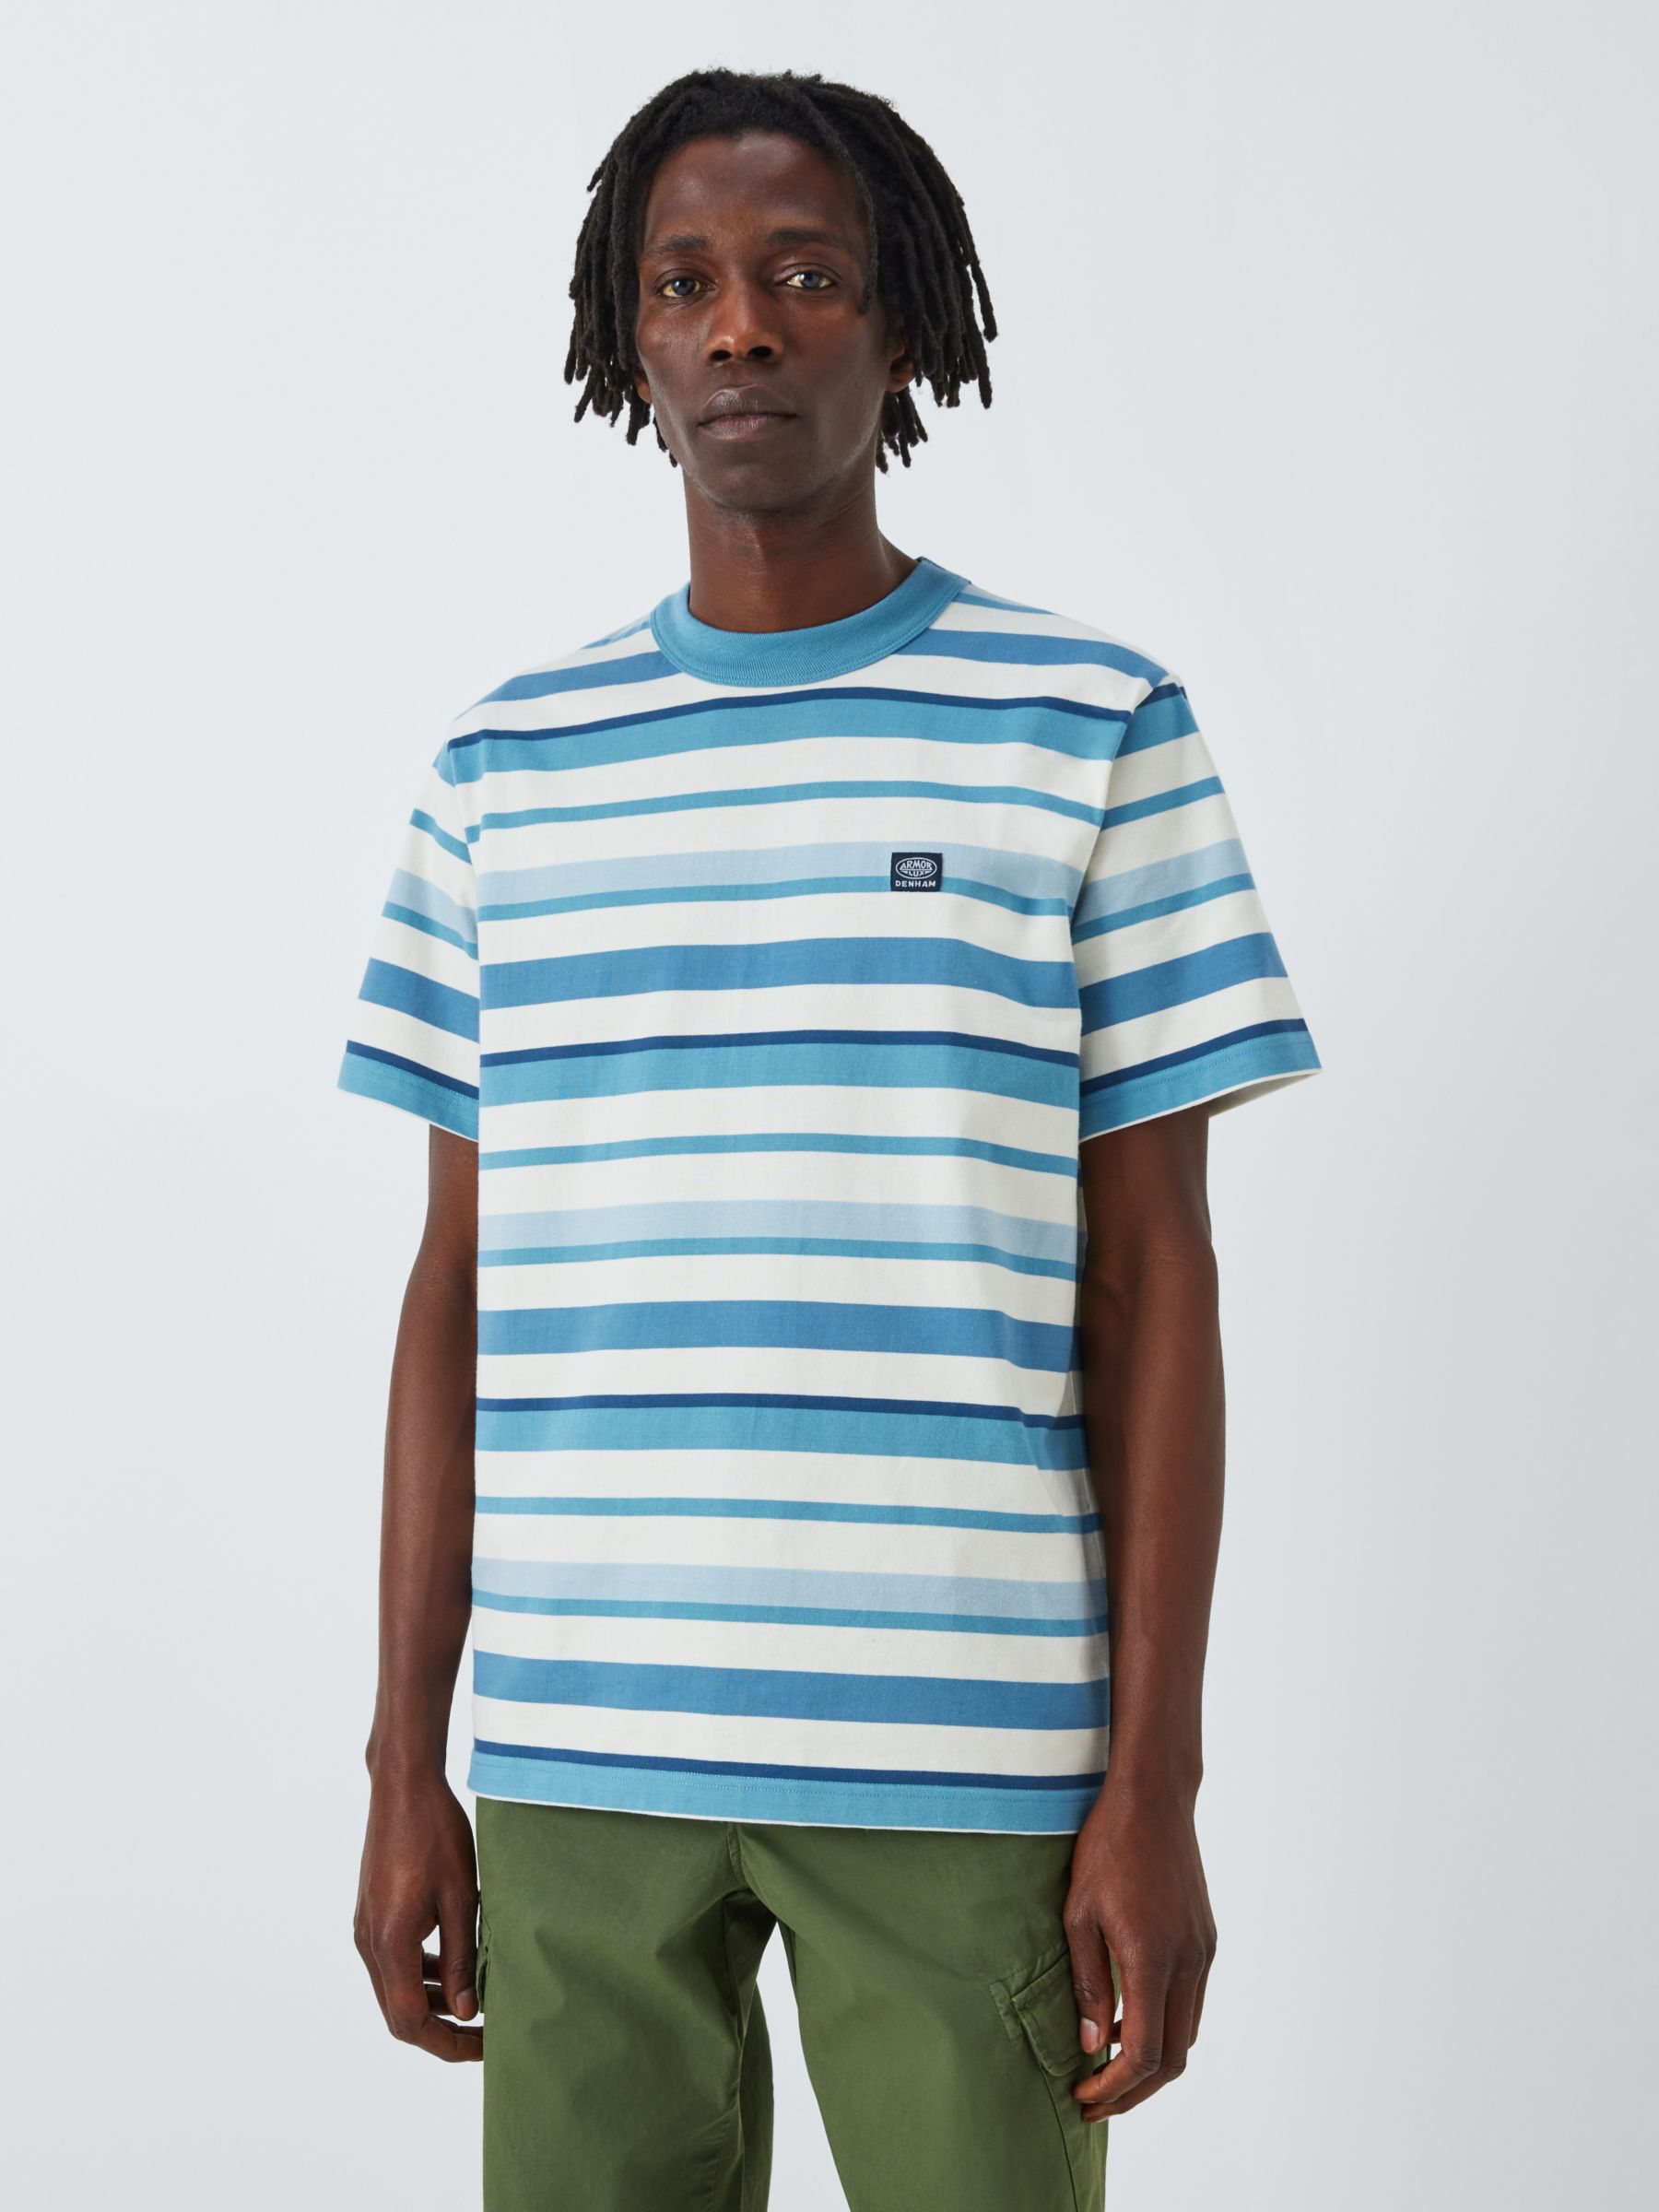 Armor Lux x Denham Short Sleeve Comfort Stripe T-Shirt, Egret/Blue, L